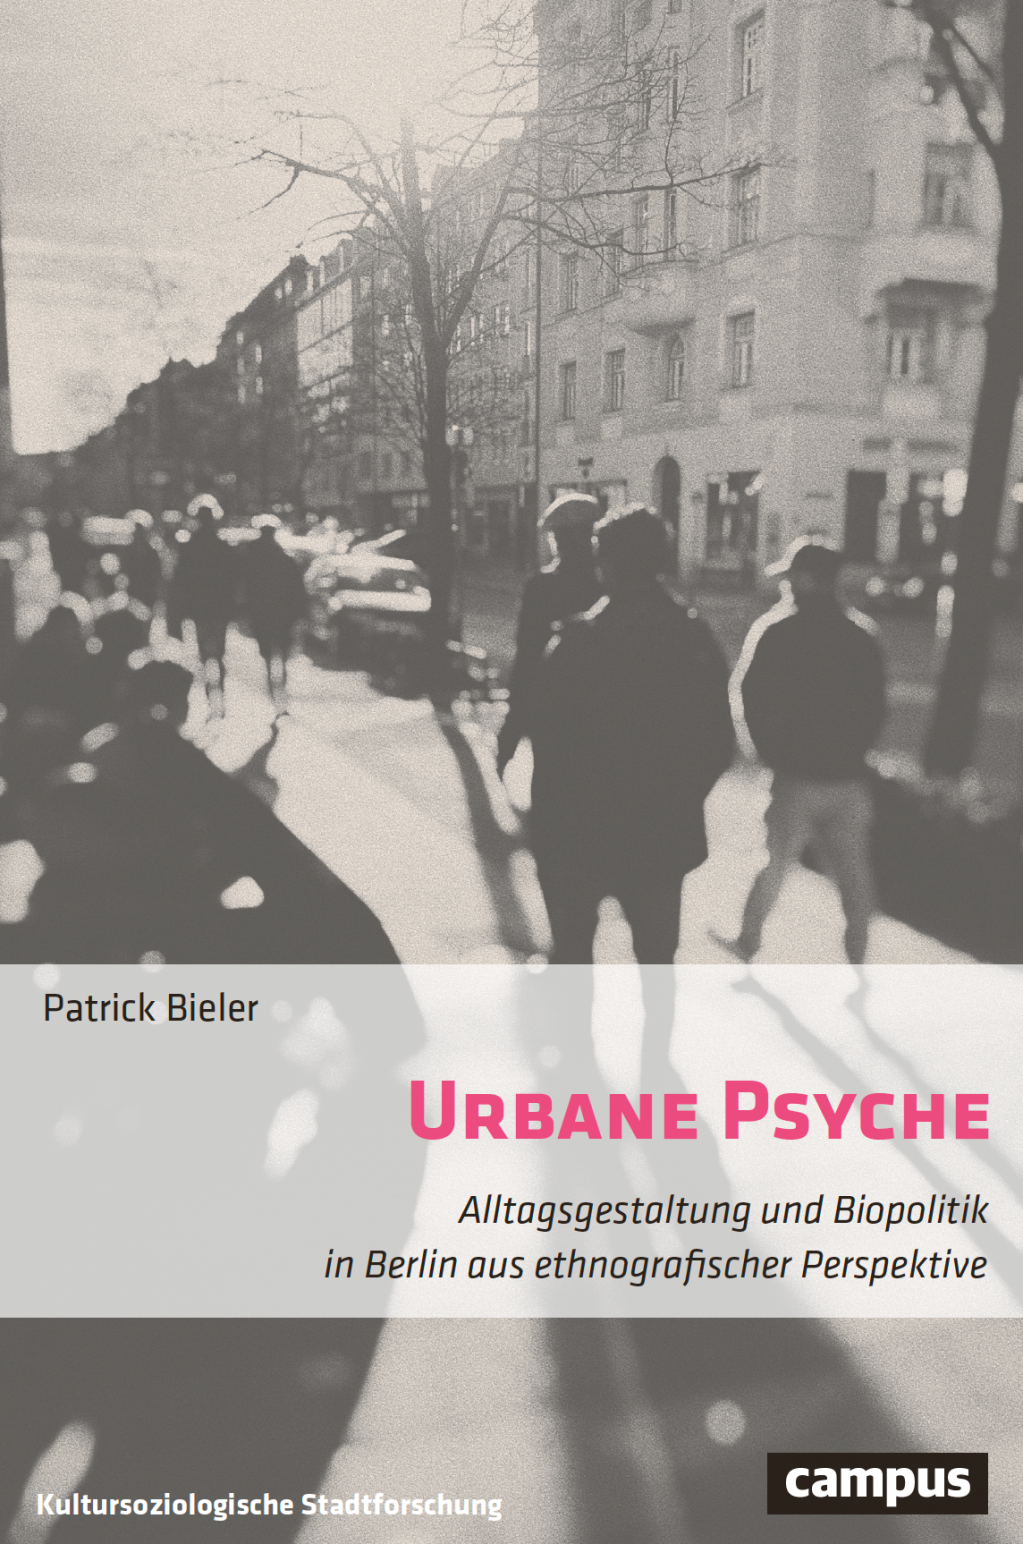 New Book: Urbane Psyche